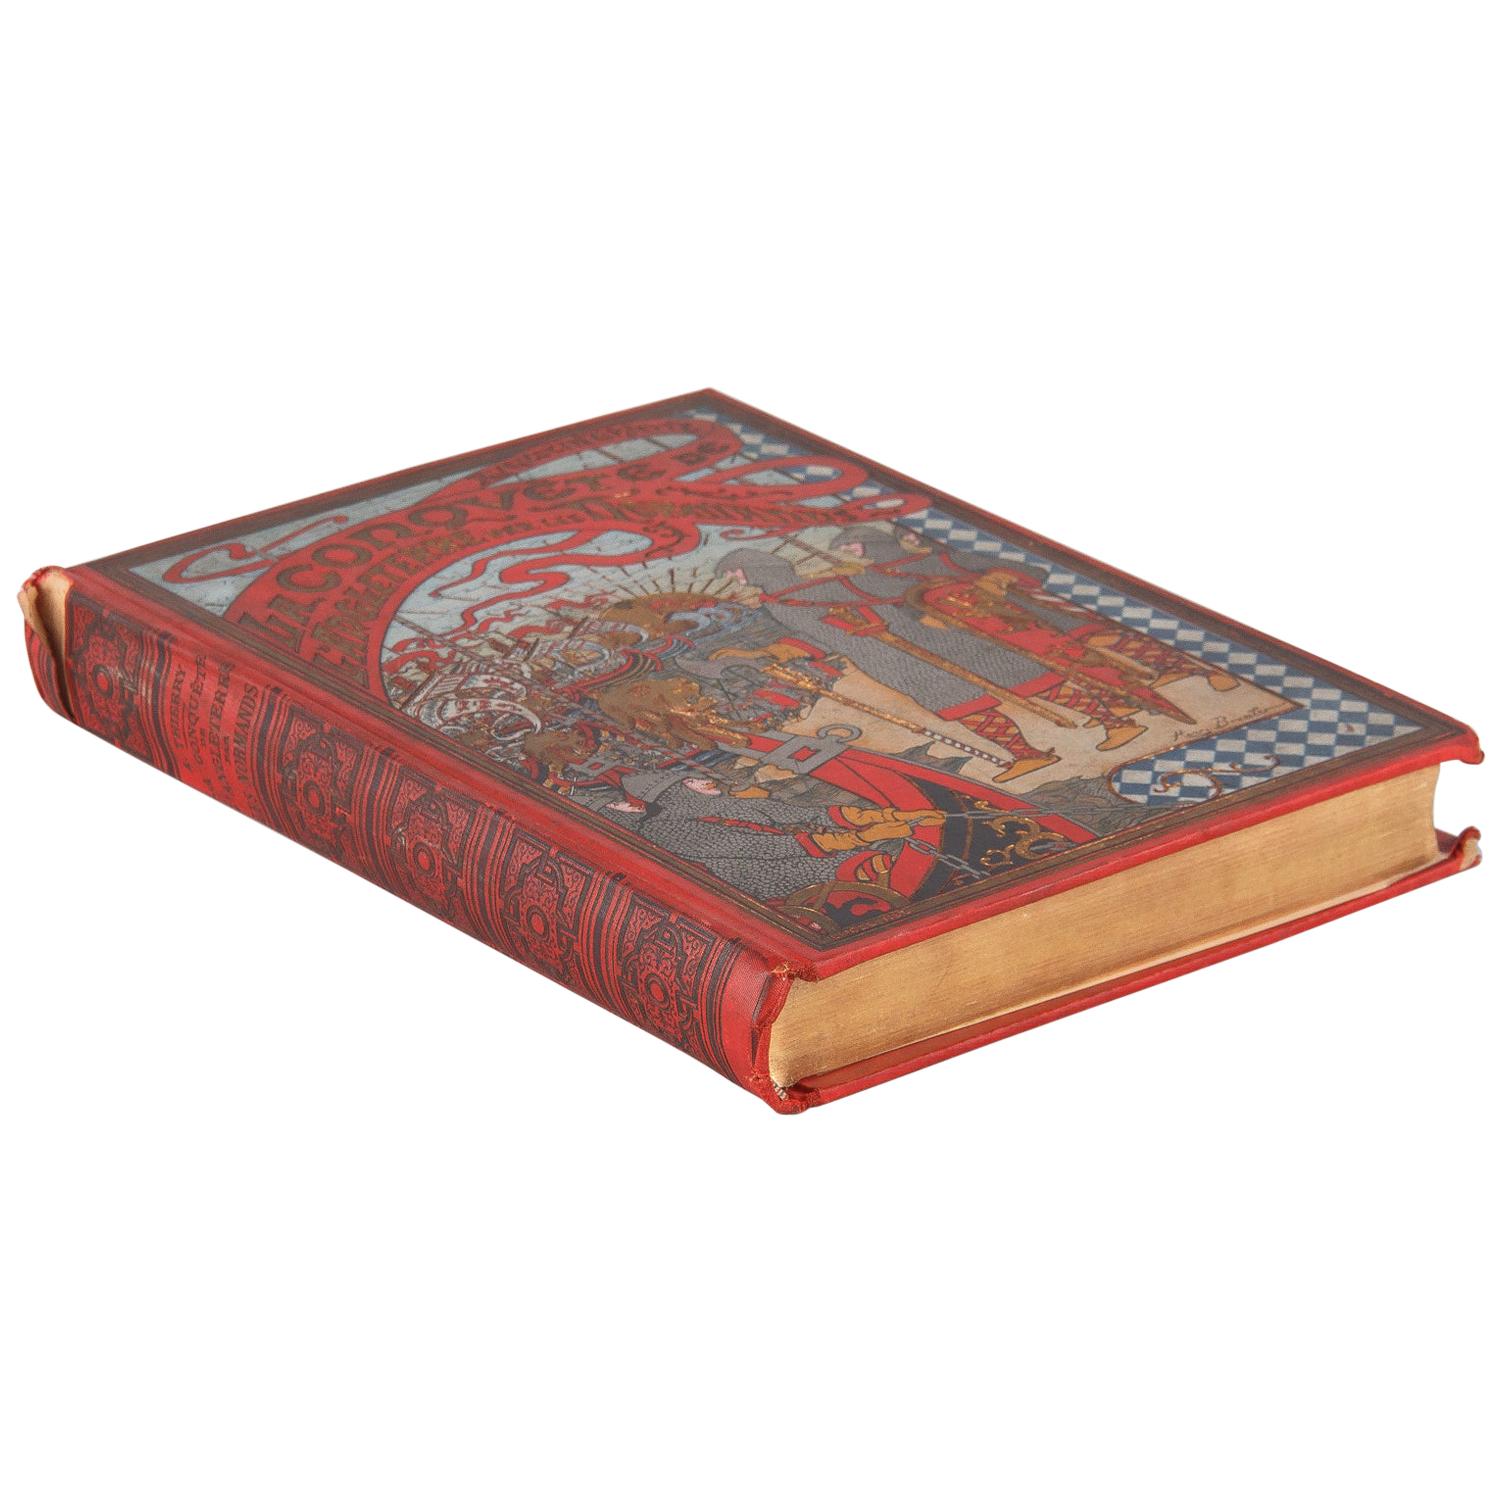 French Book-Histoire de la Conquete de L'Angleterre by Augustin Thierry, 1900